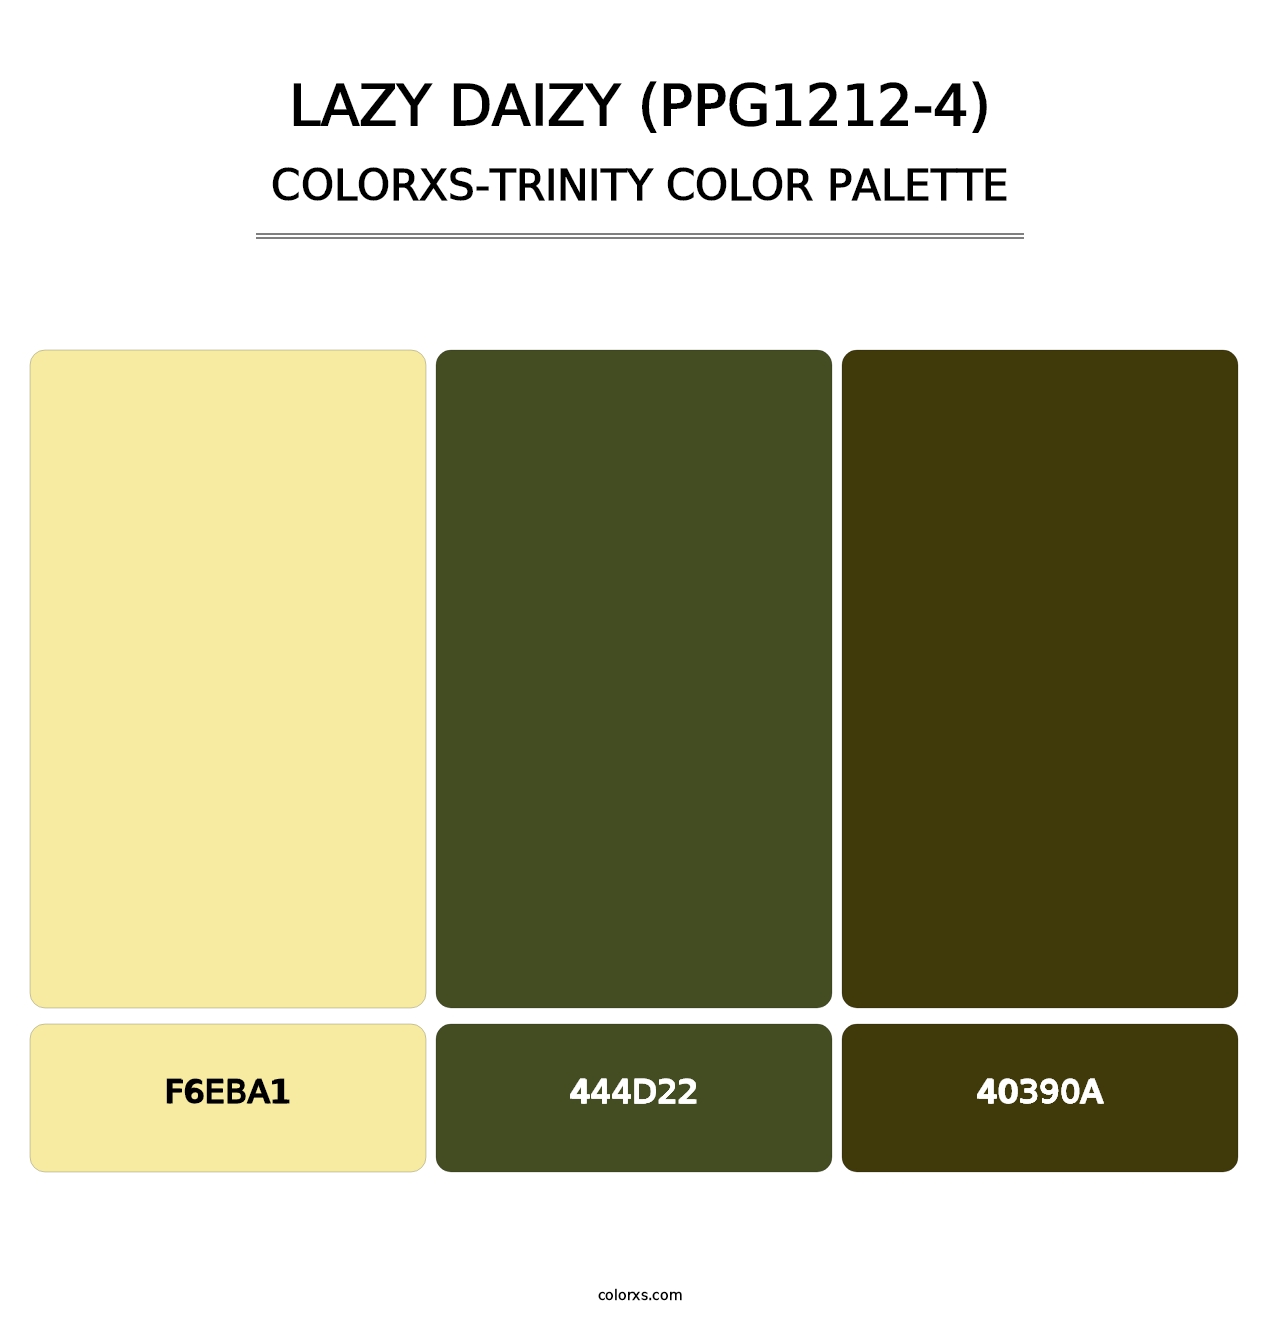 Lazy Daizy (PPG1212-4) - Colorxs Trinity Palette